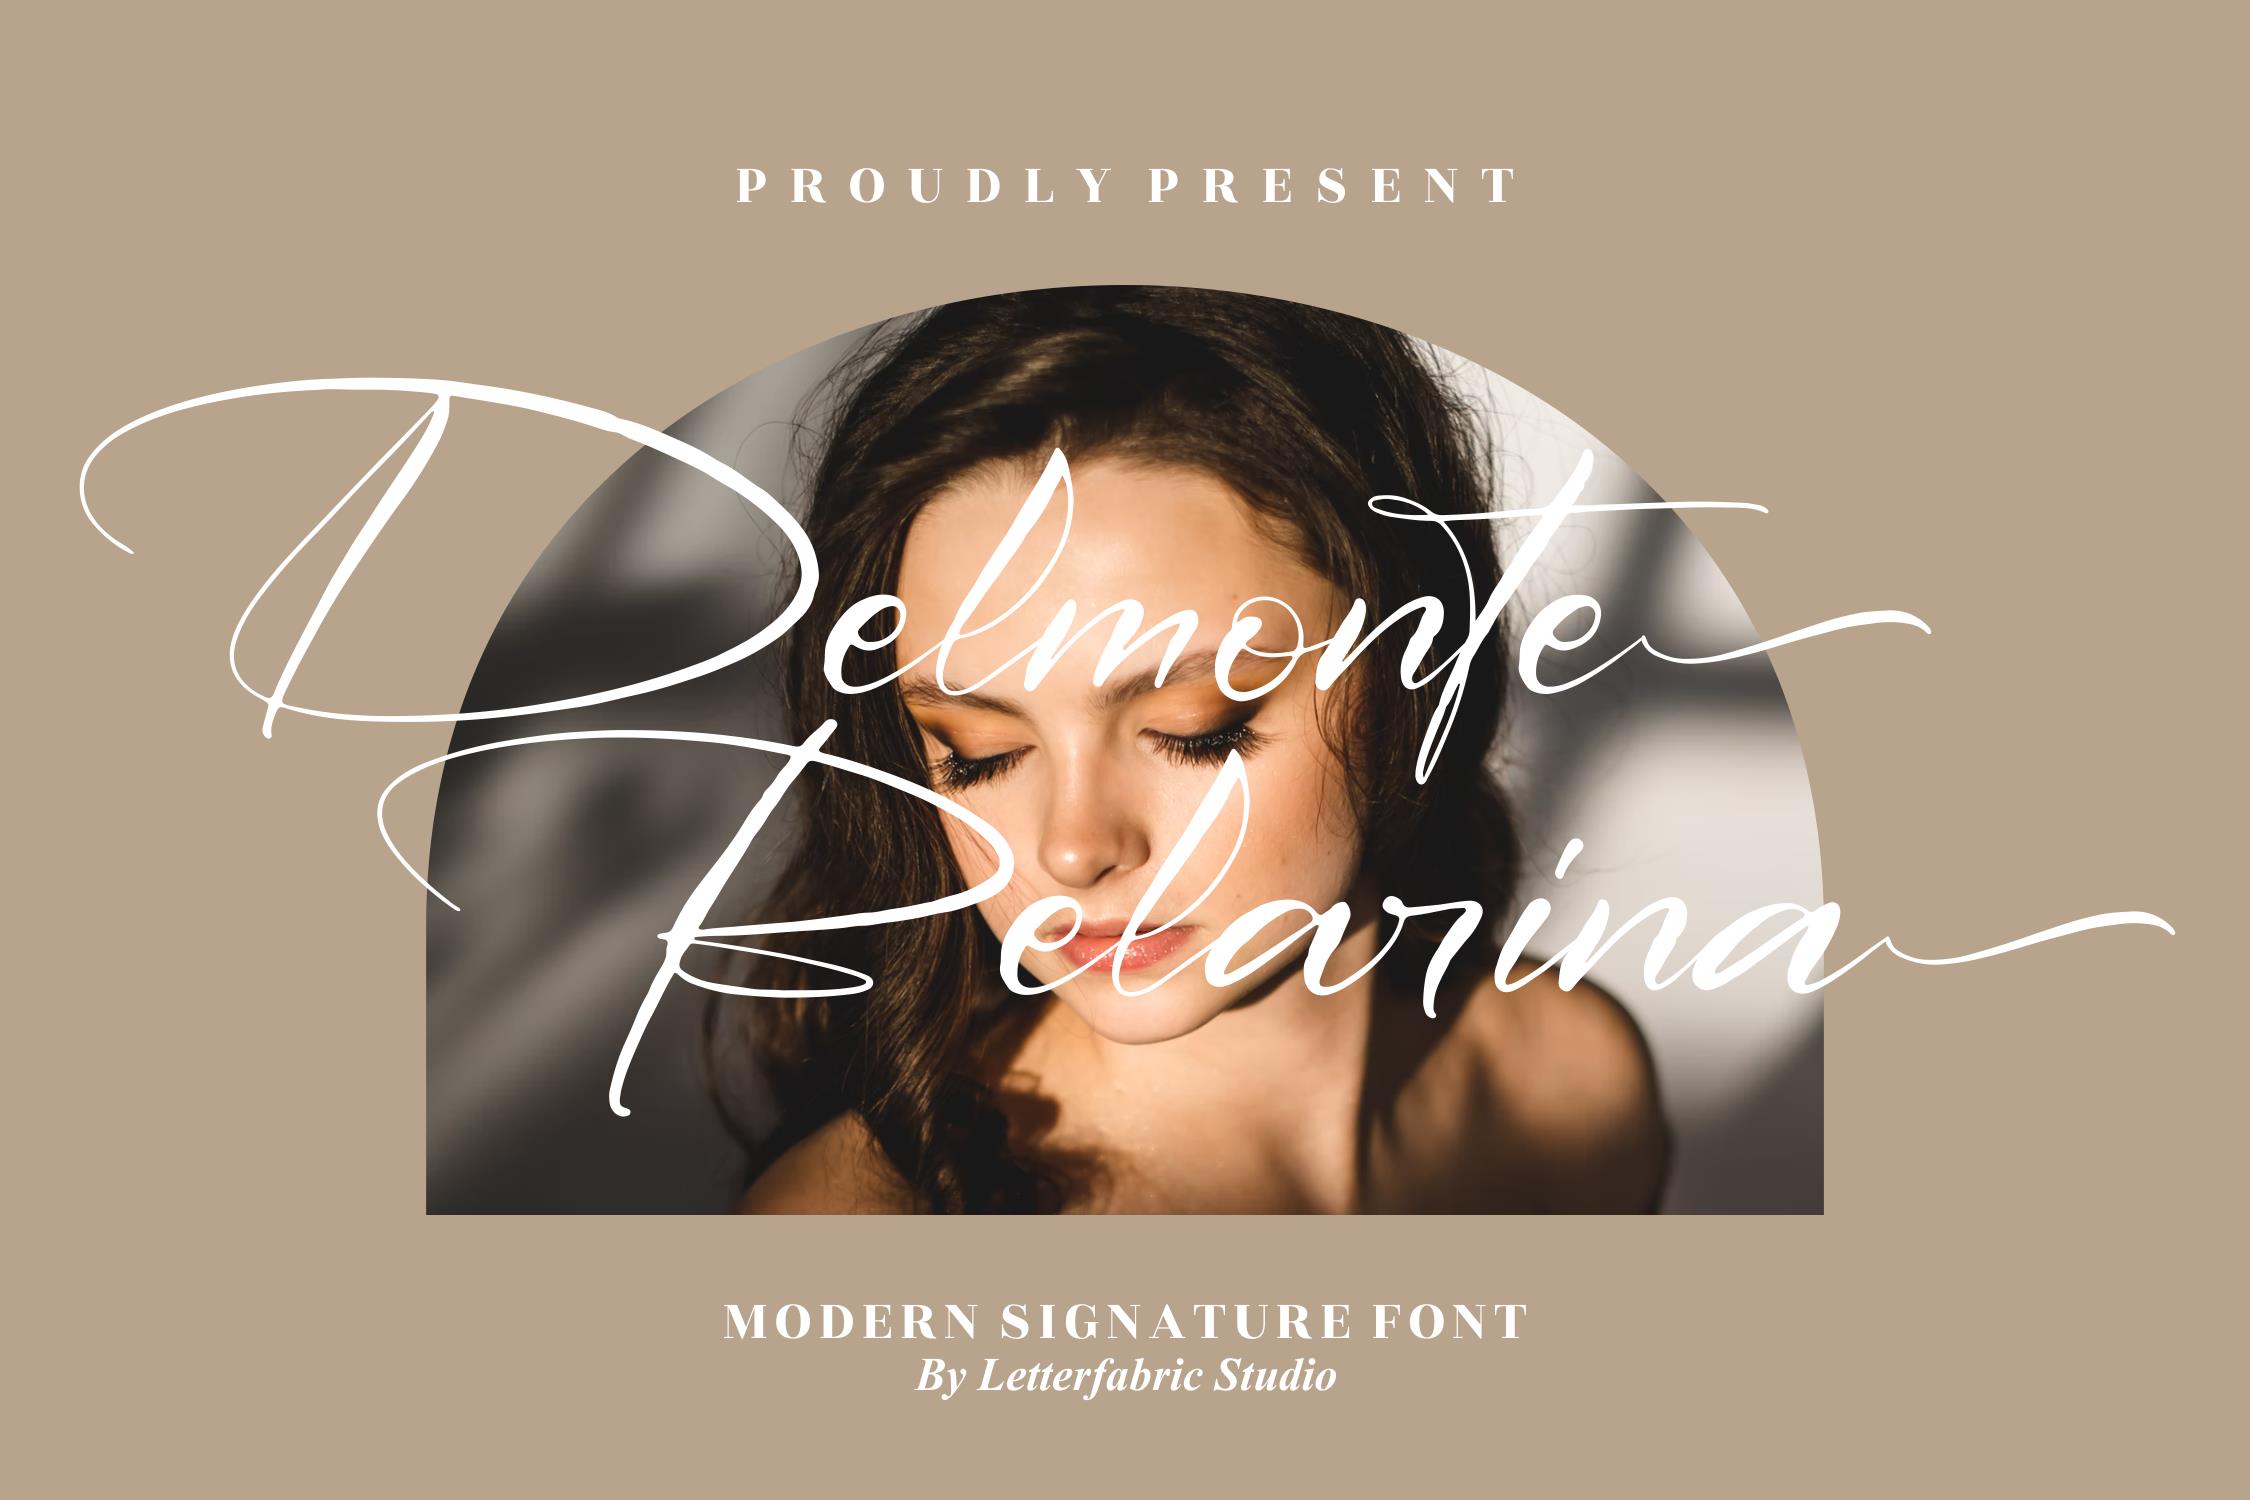 Delmonte Belarina Script Font